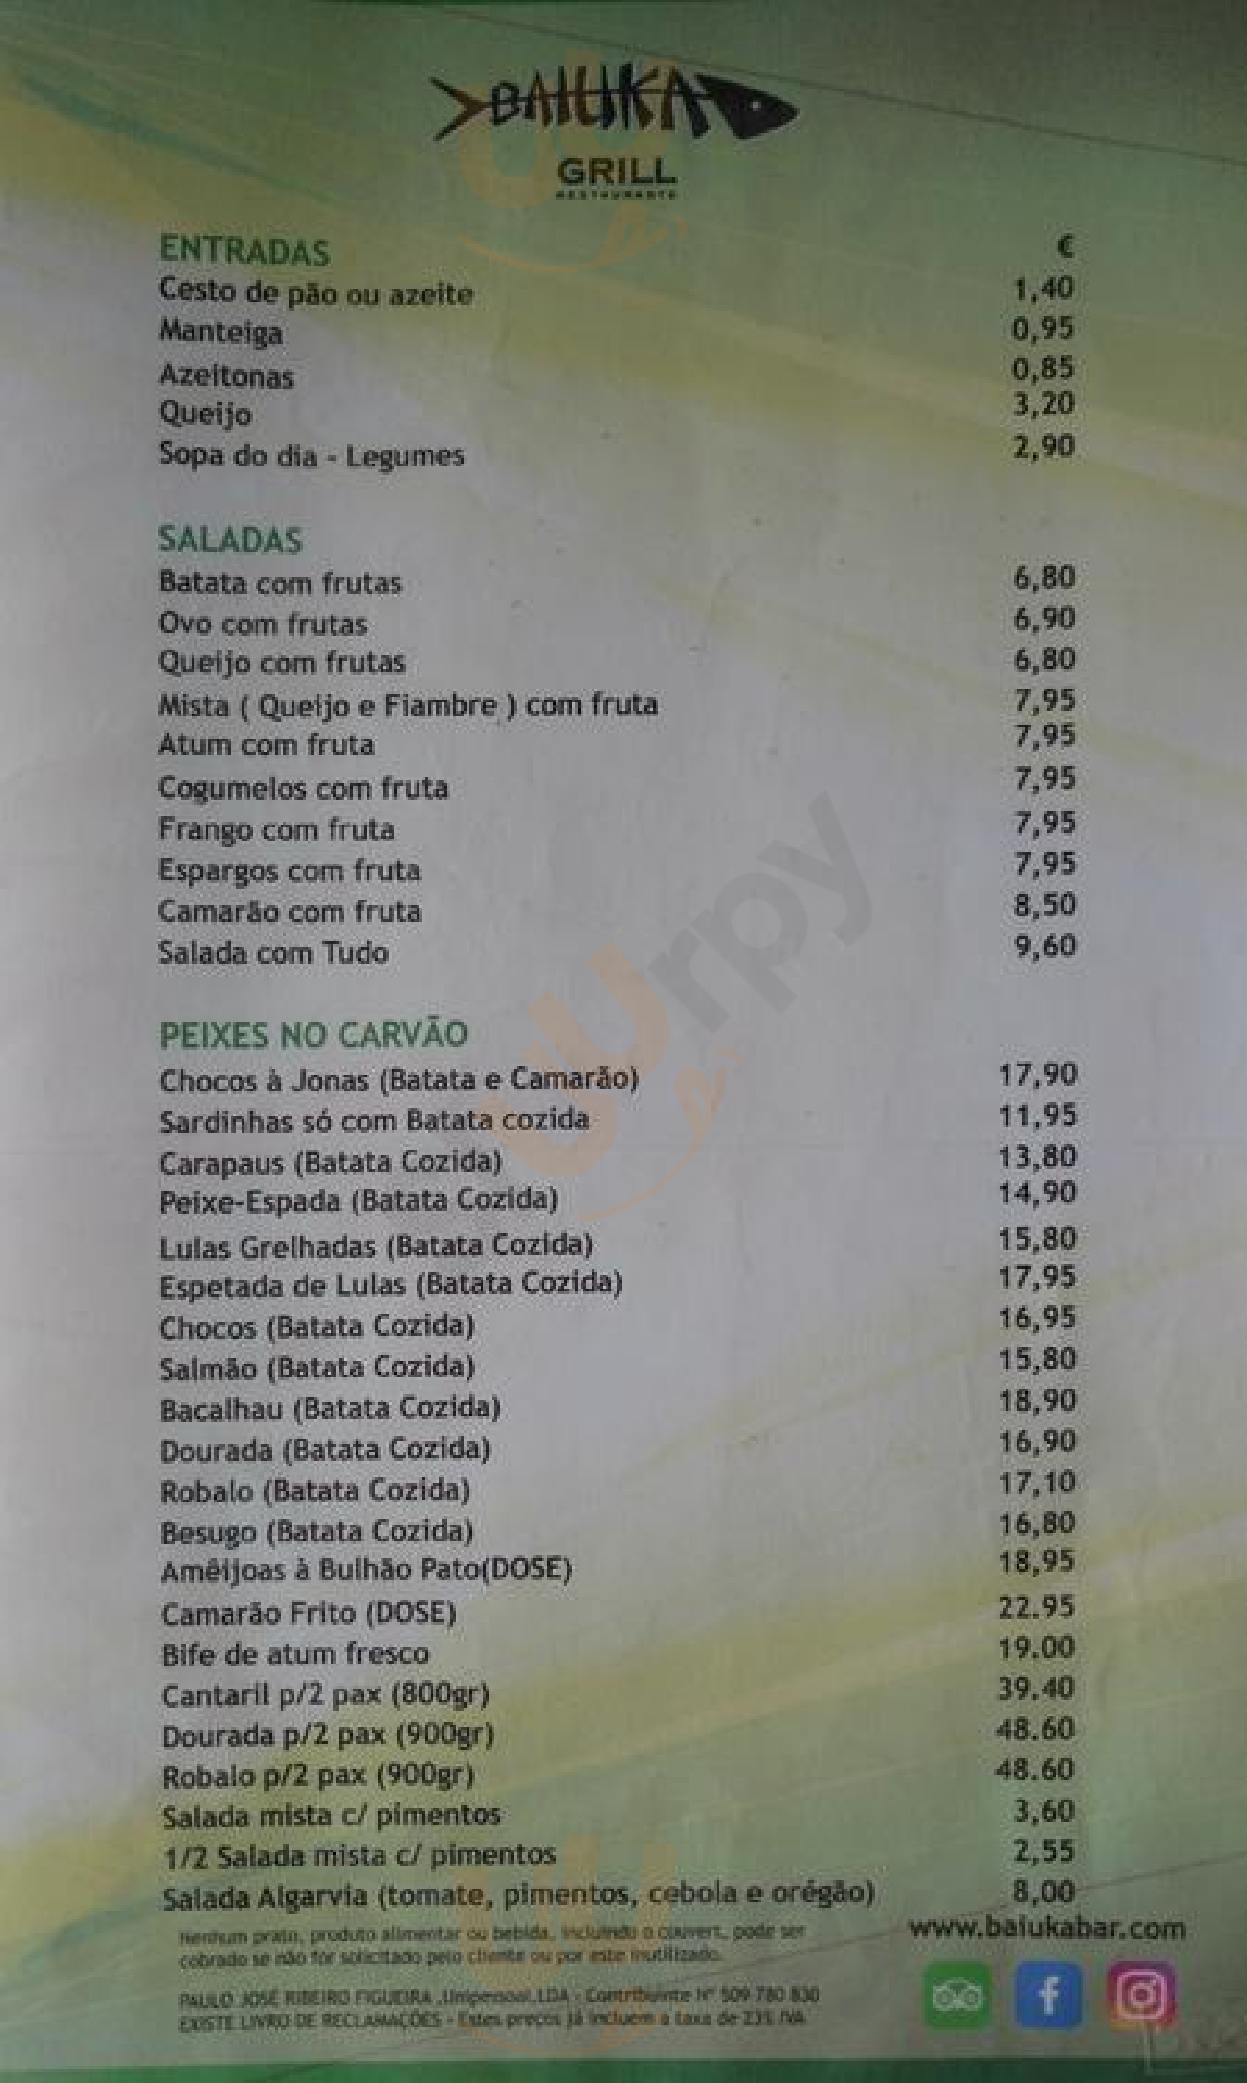 Baiuka Grill Restaurant Estoril Menu - 1